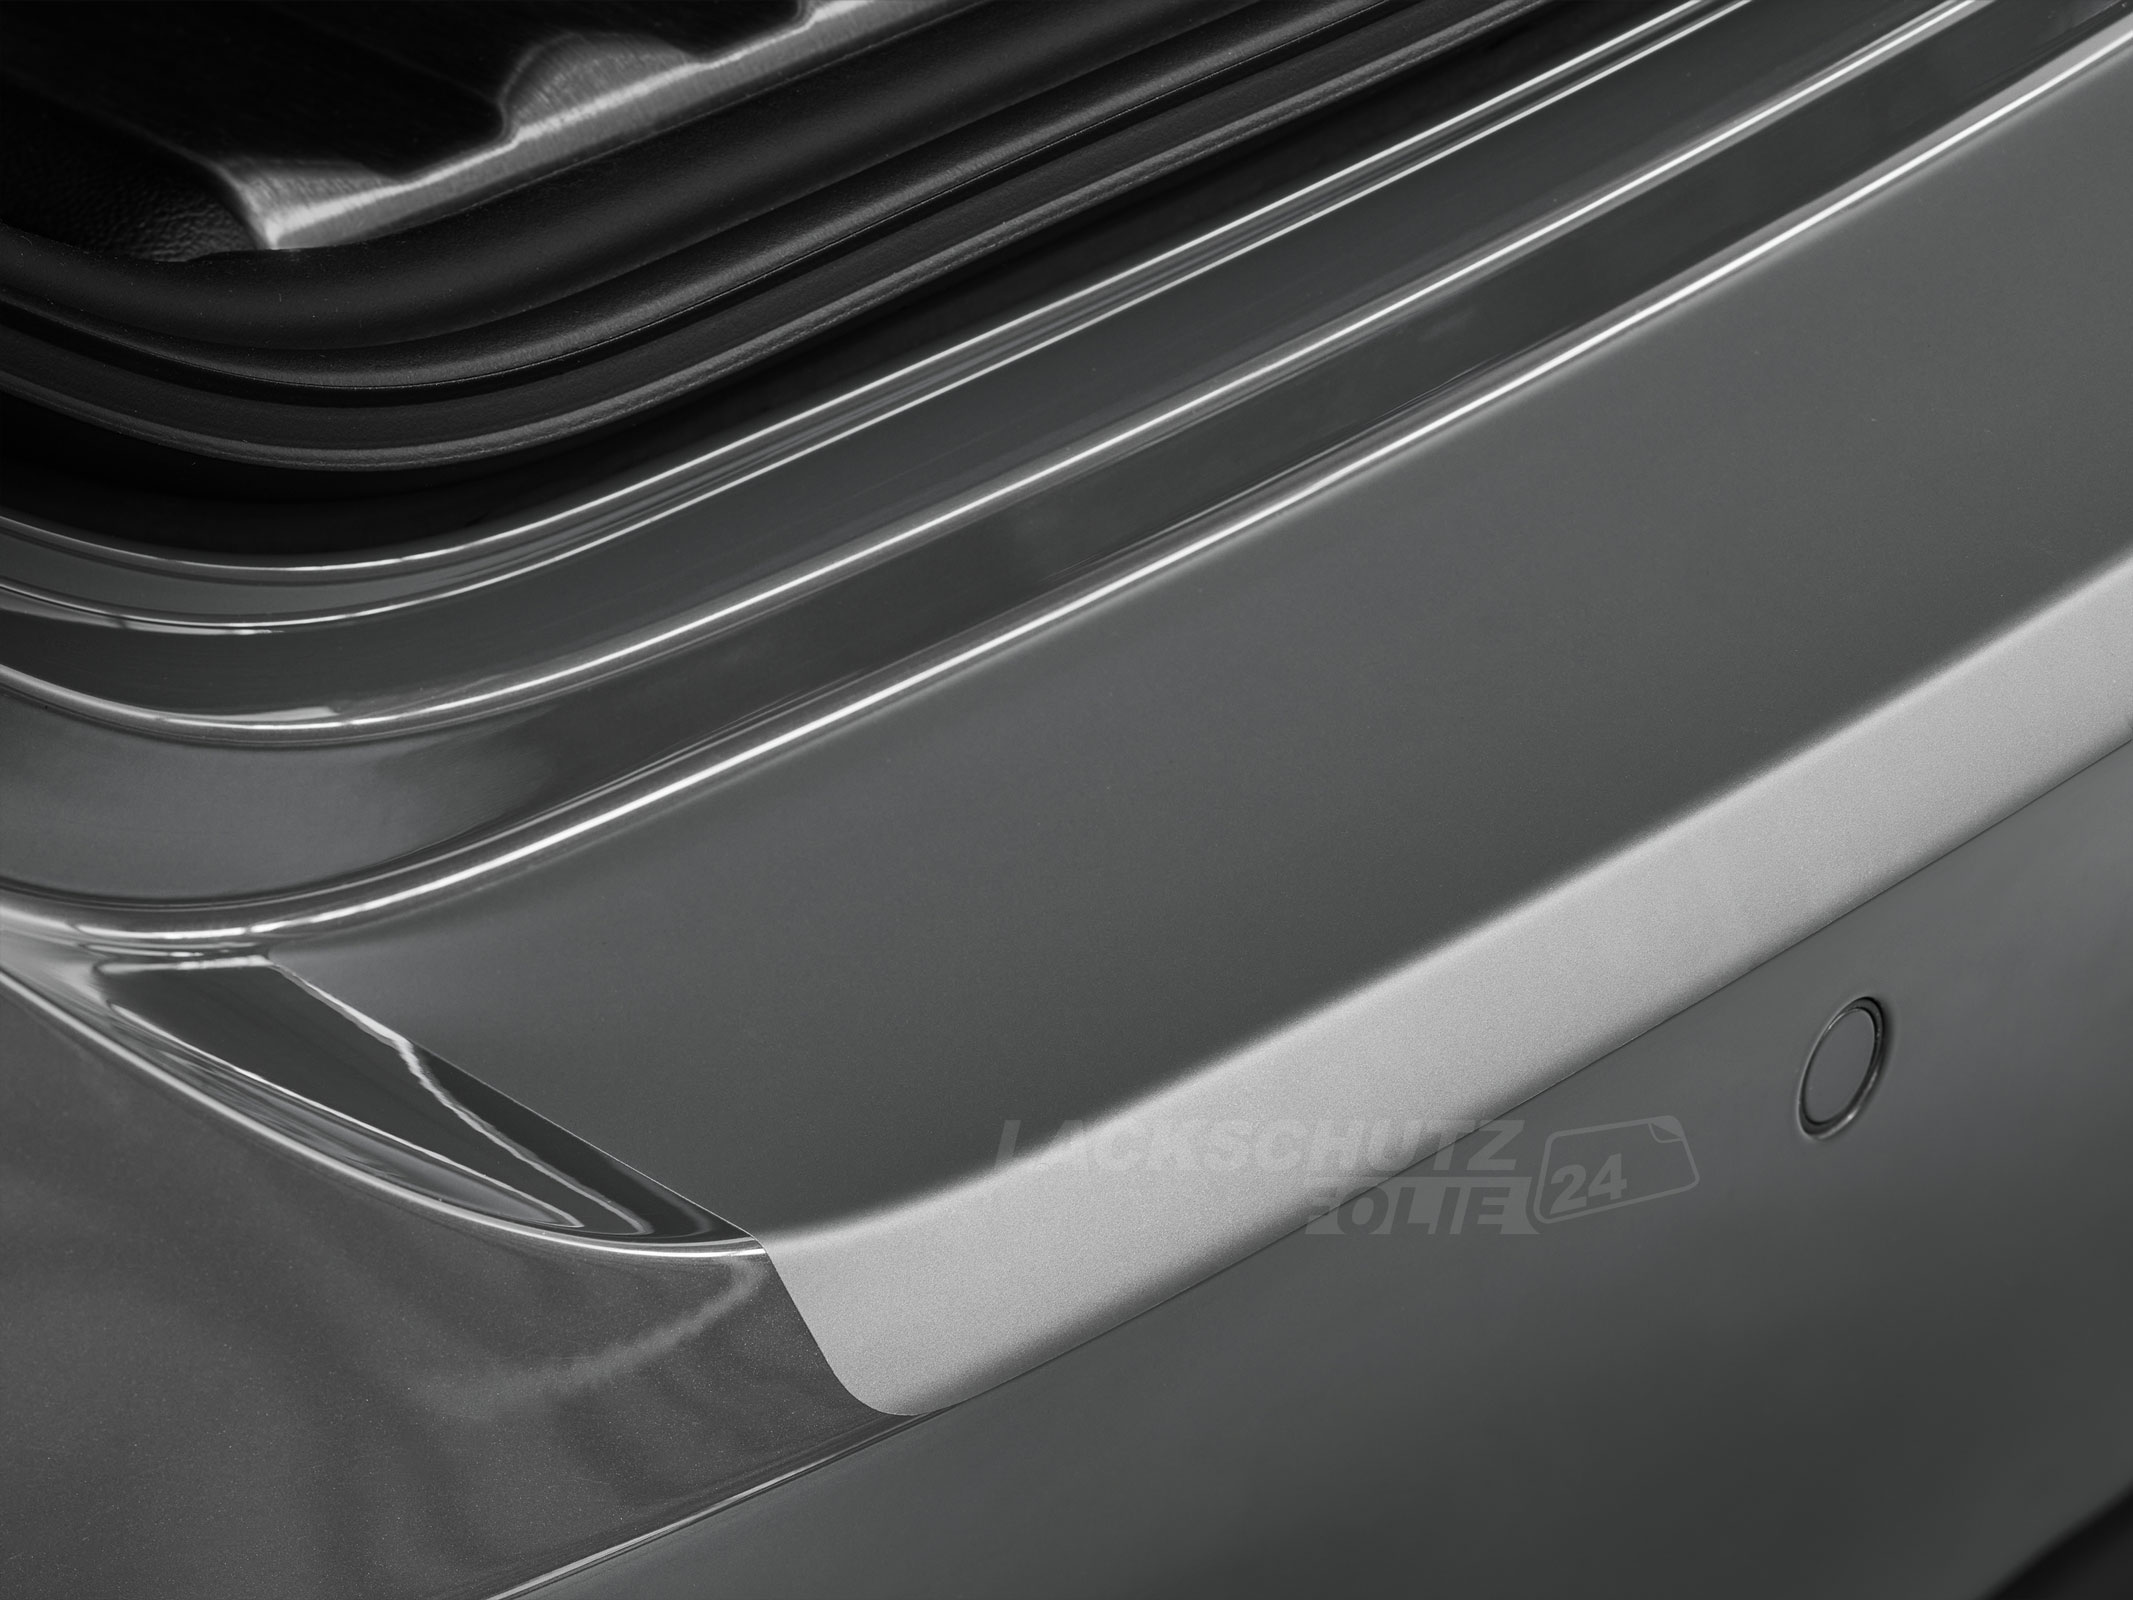 Ladekantenschutzfolie - Transparent Glatt MATT für Mercedes-Benz A-Klasse Typ V177, Limousine, ab BJ 05/2018